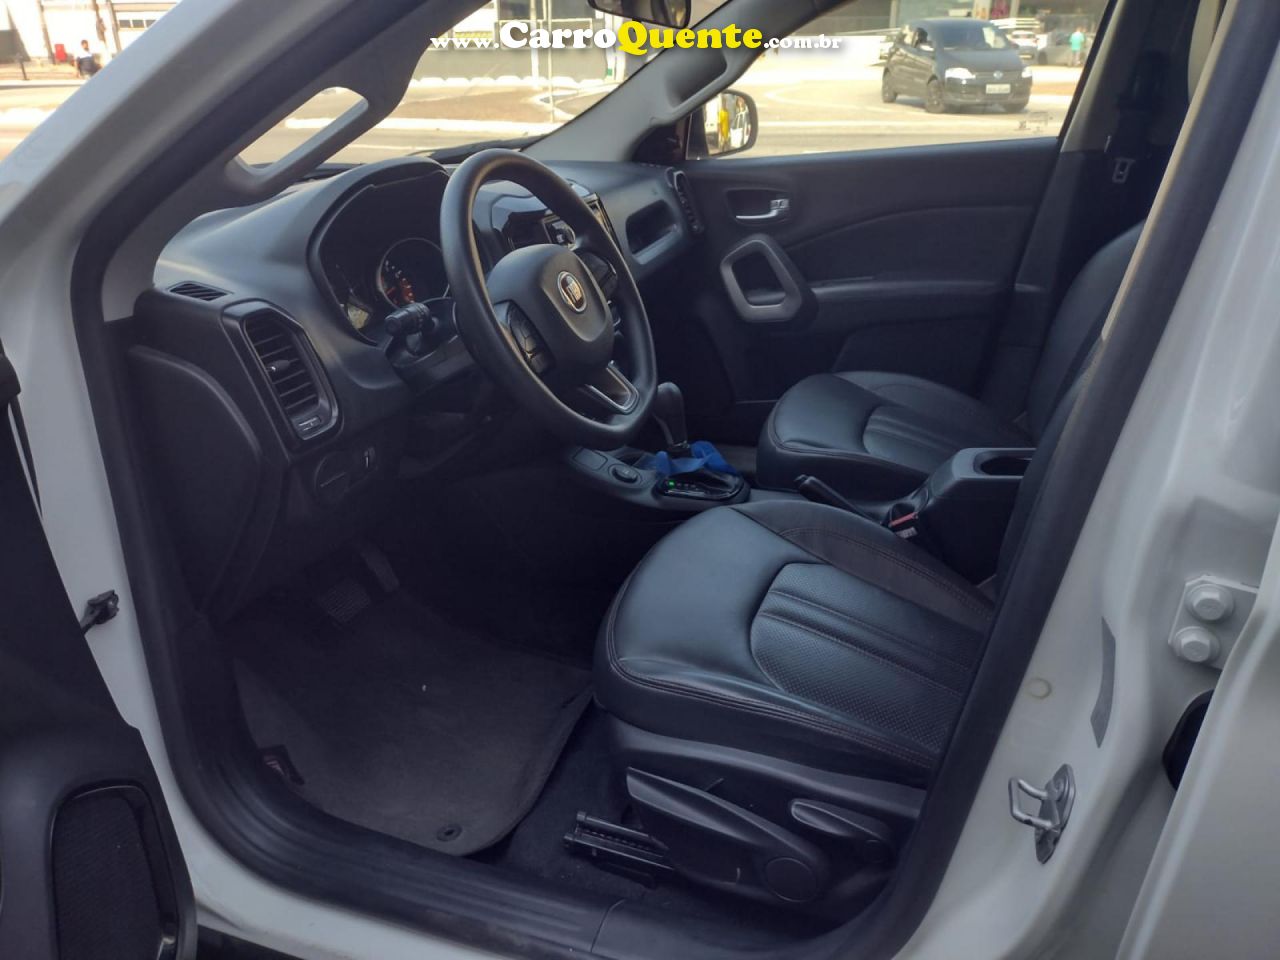 FIAT   TORO ENDURANCE 1.8 16V FLEX AUT.   BRANCO 2019 1.8 FLEX - Loja